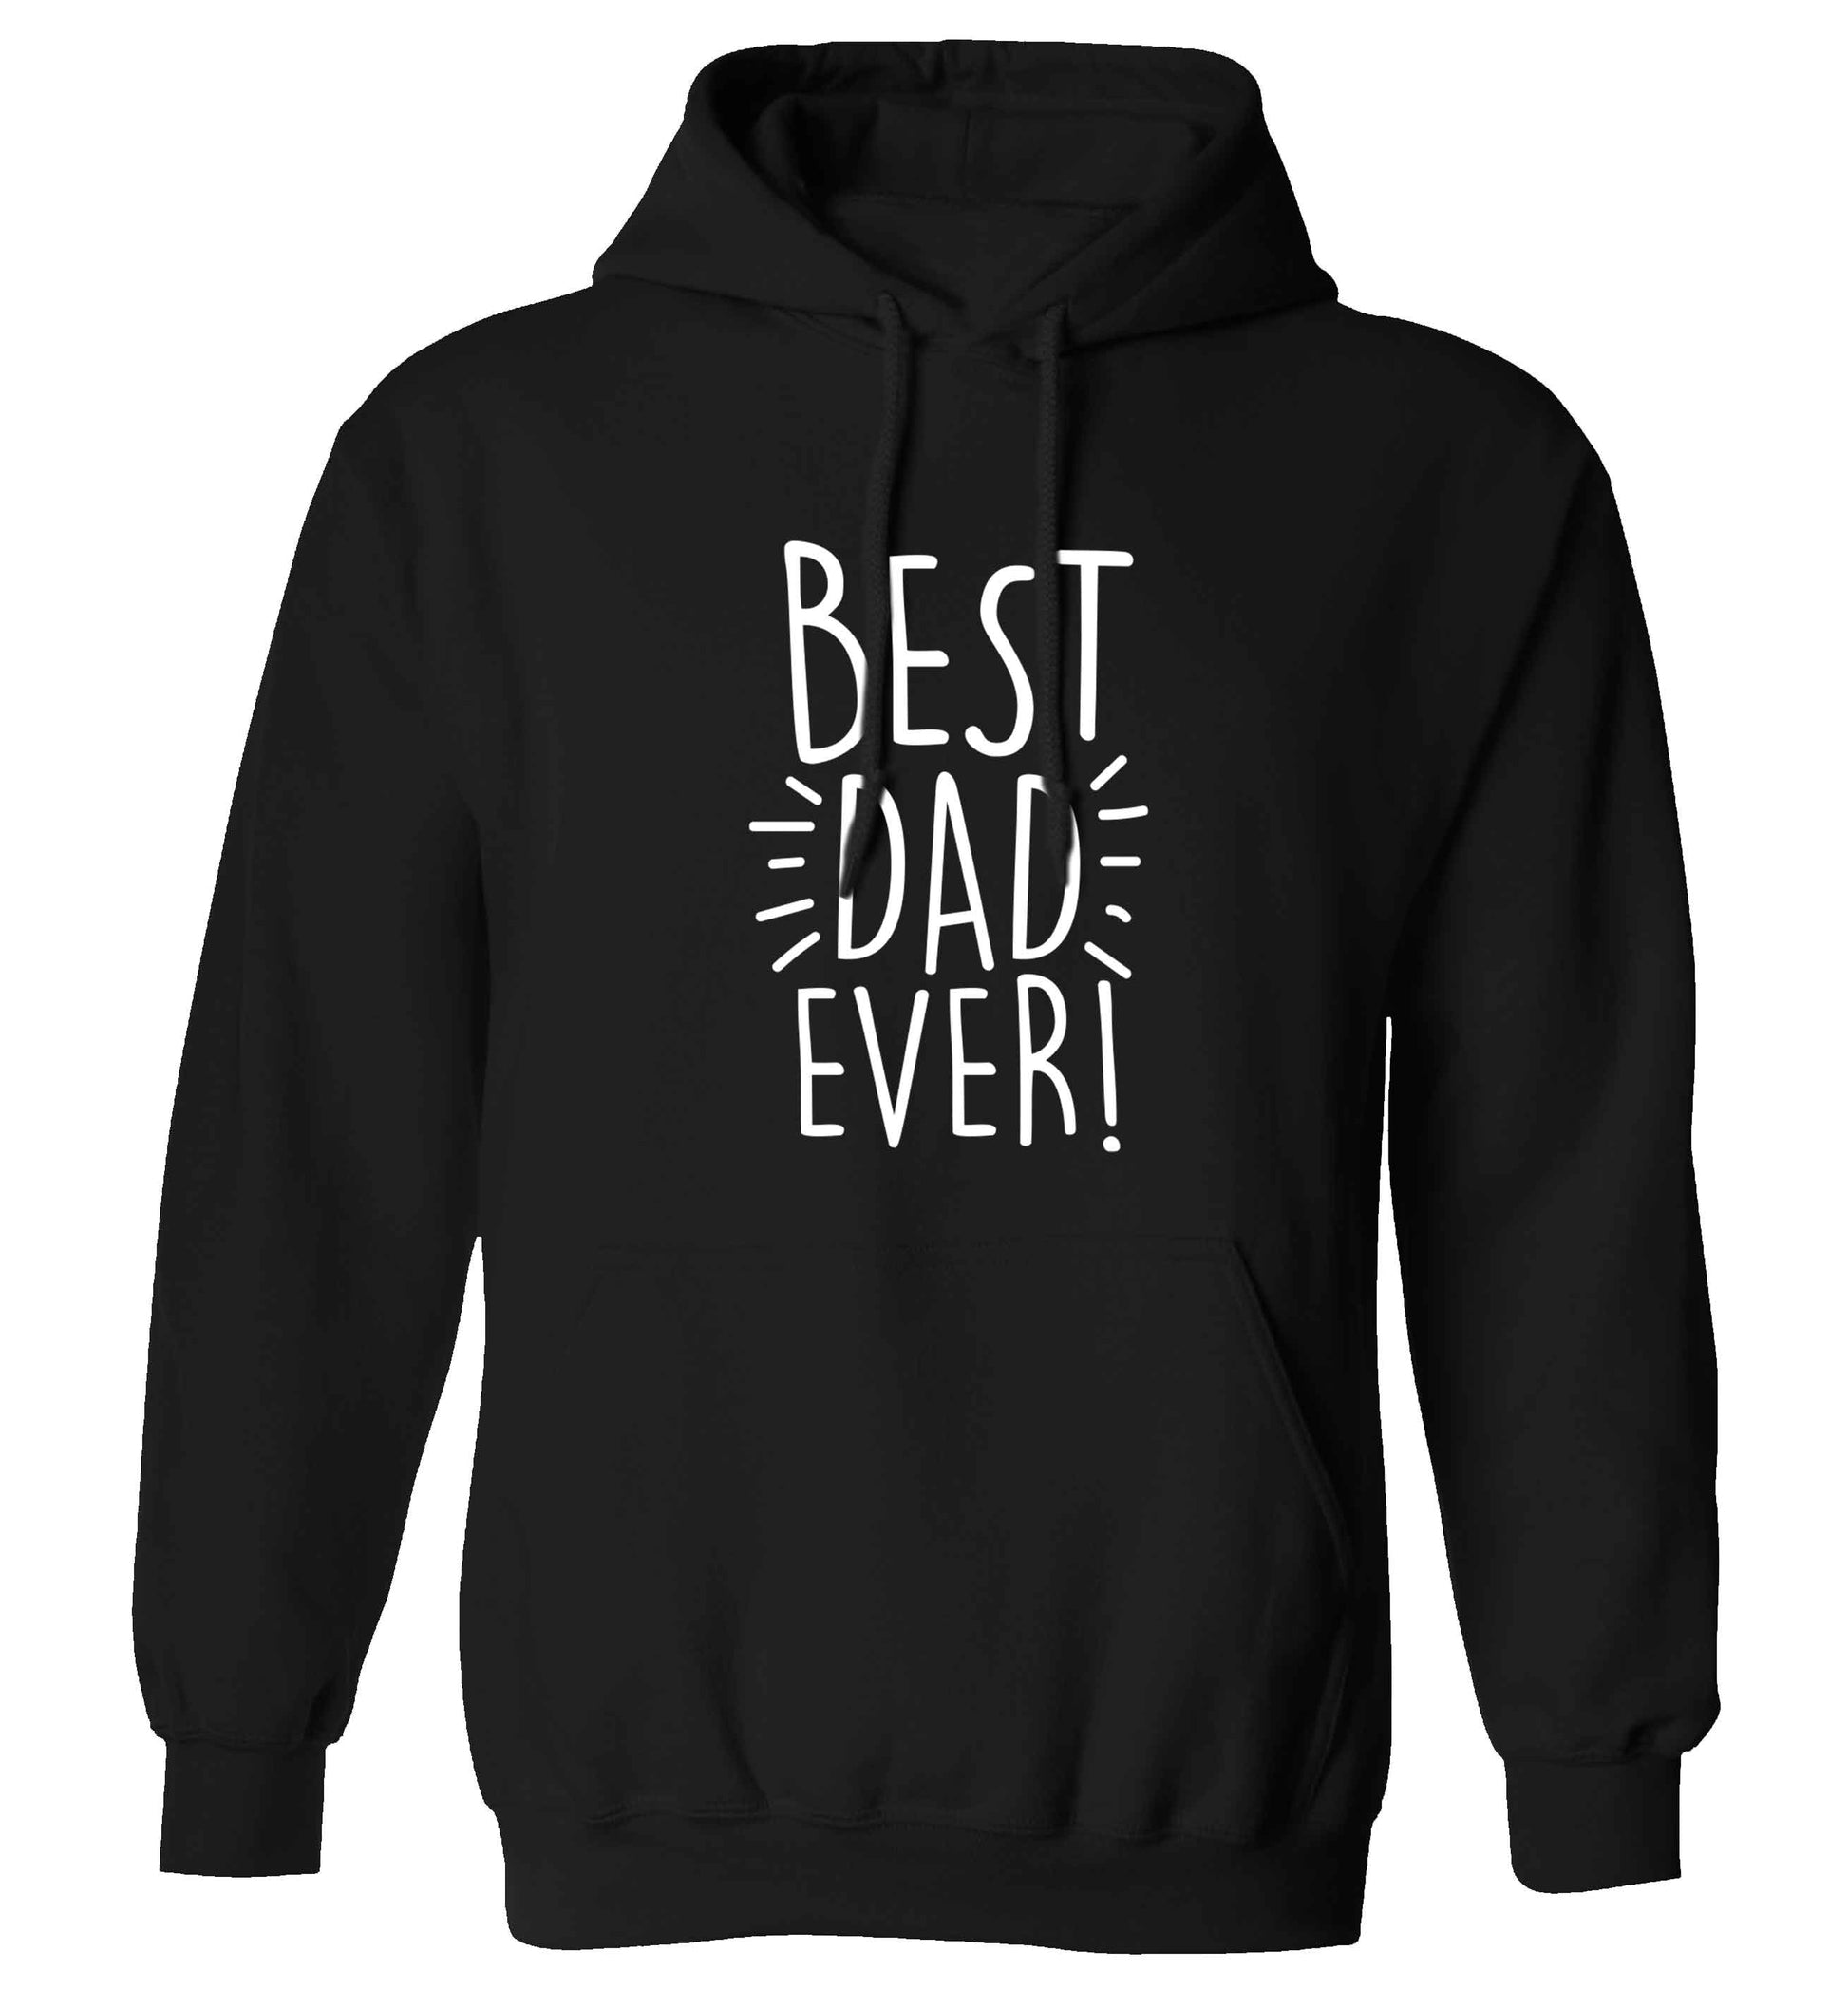 Best dad ever! adults unisex black hoodie 2XL